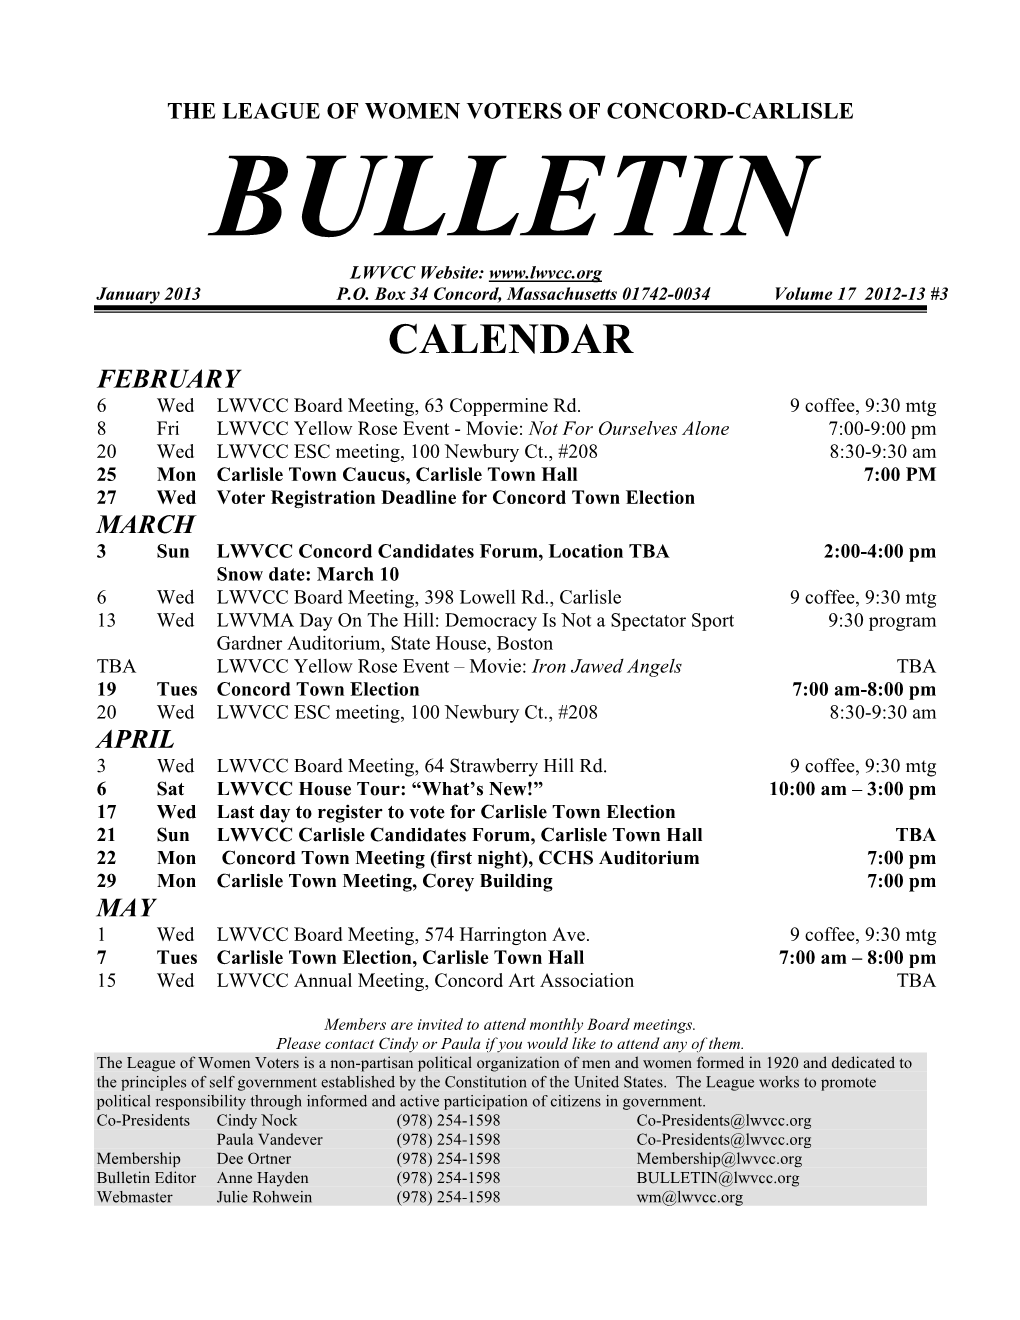 January 2013 Bulletin